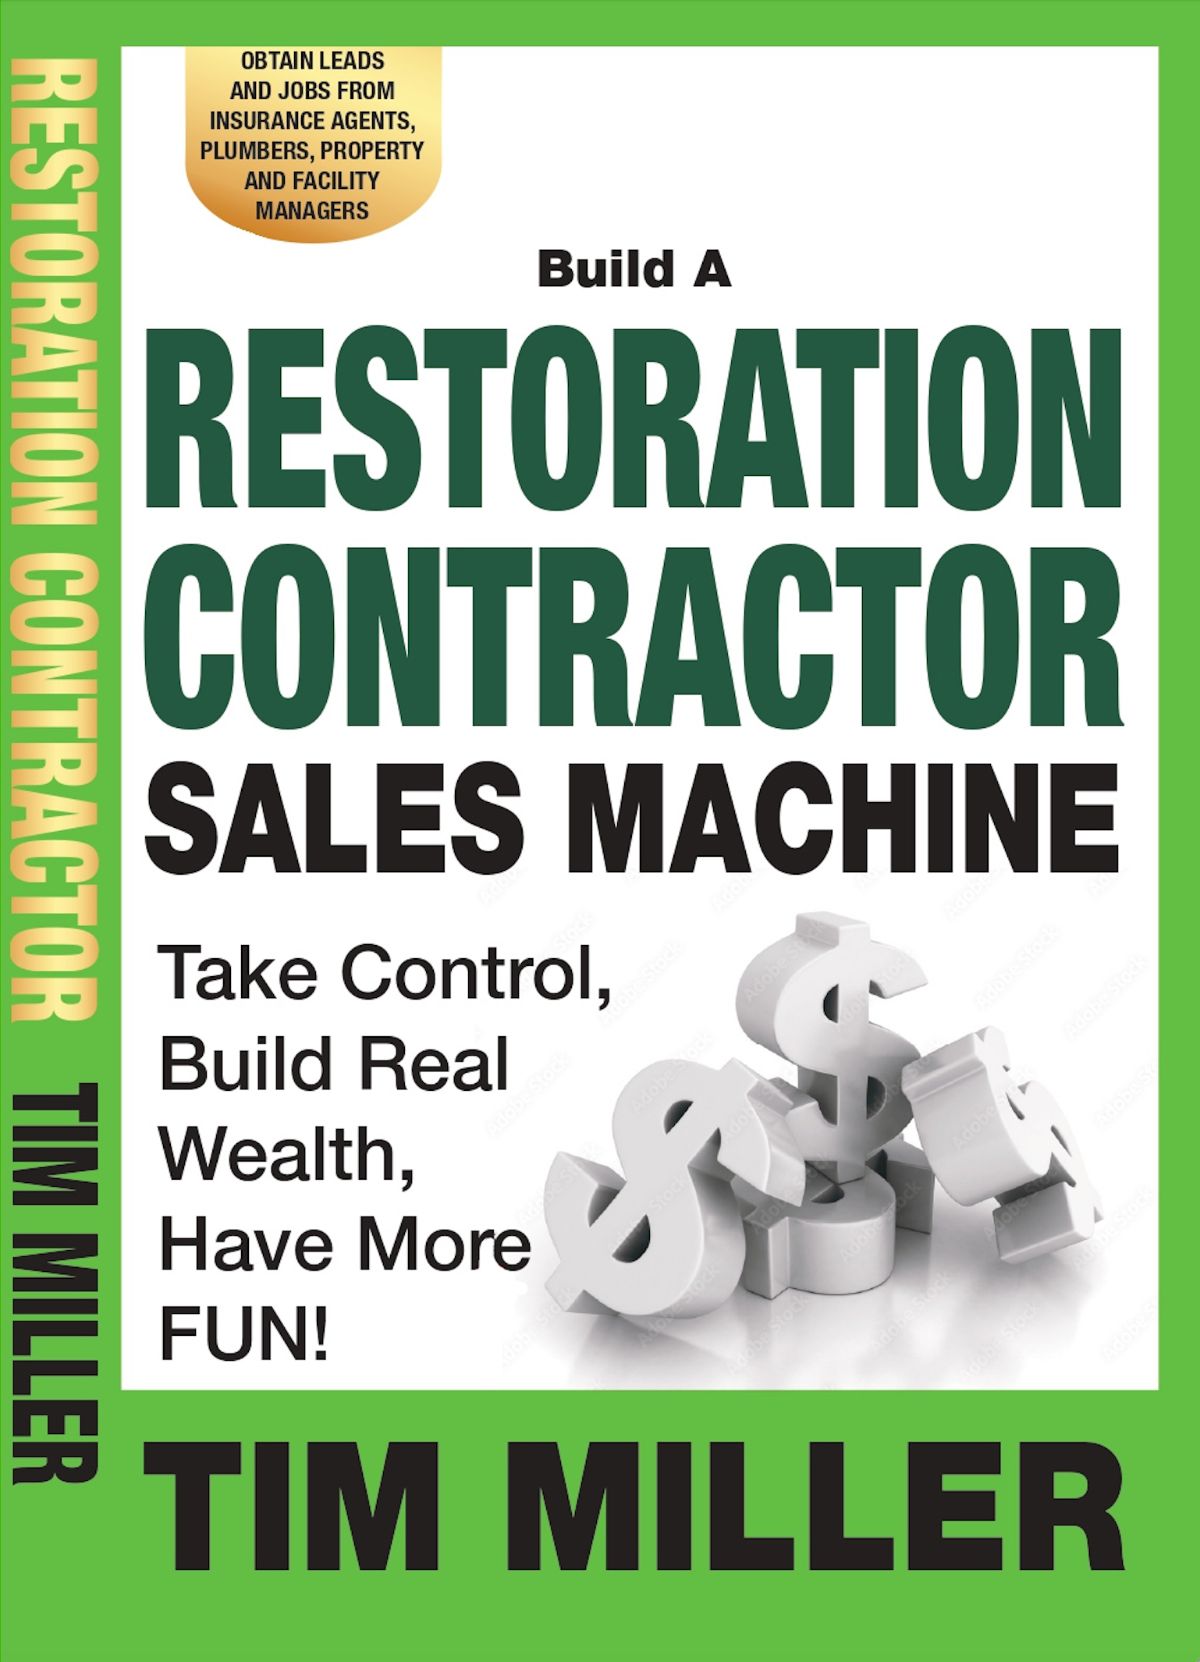 Build a Restoration Contractor Sales Machine